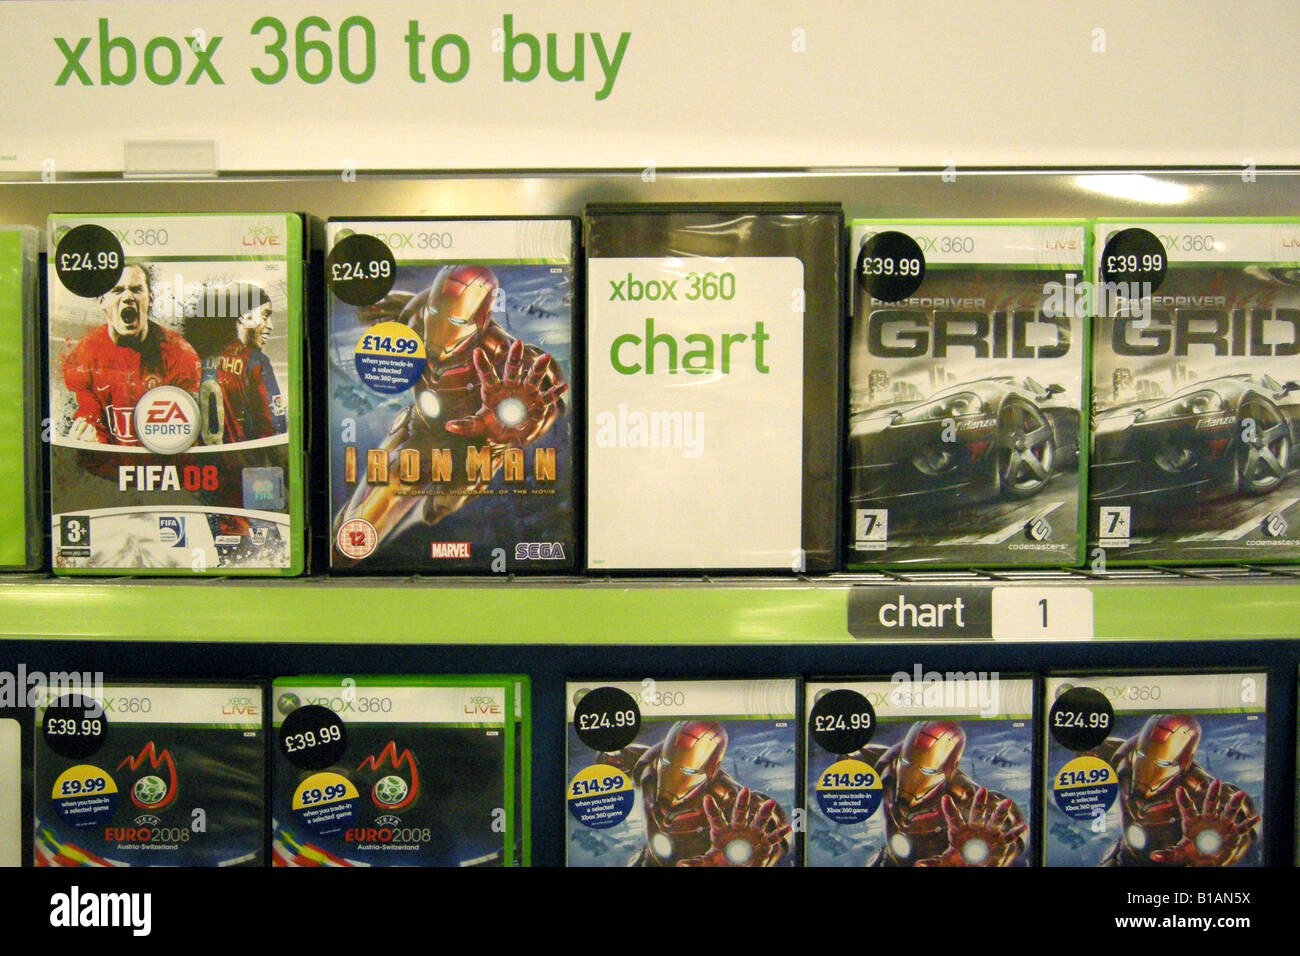 xbox 360 games 2008